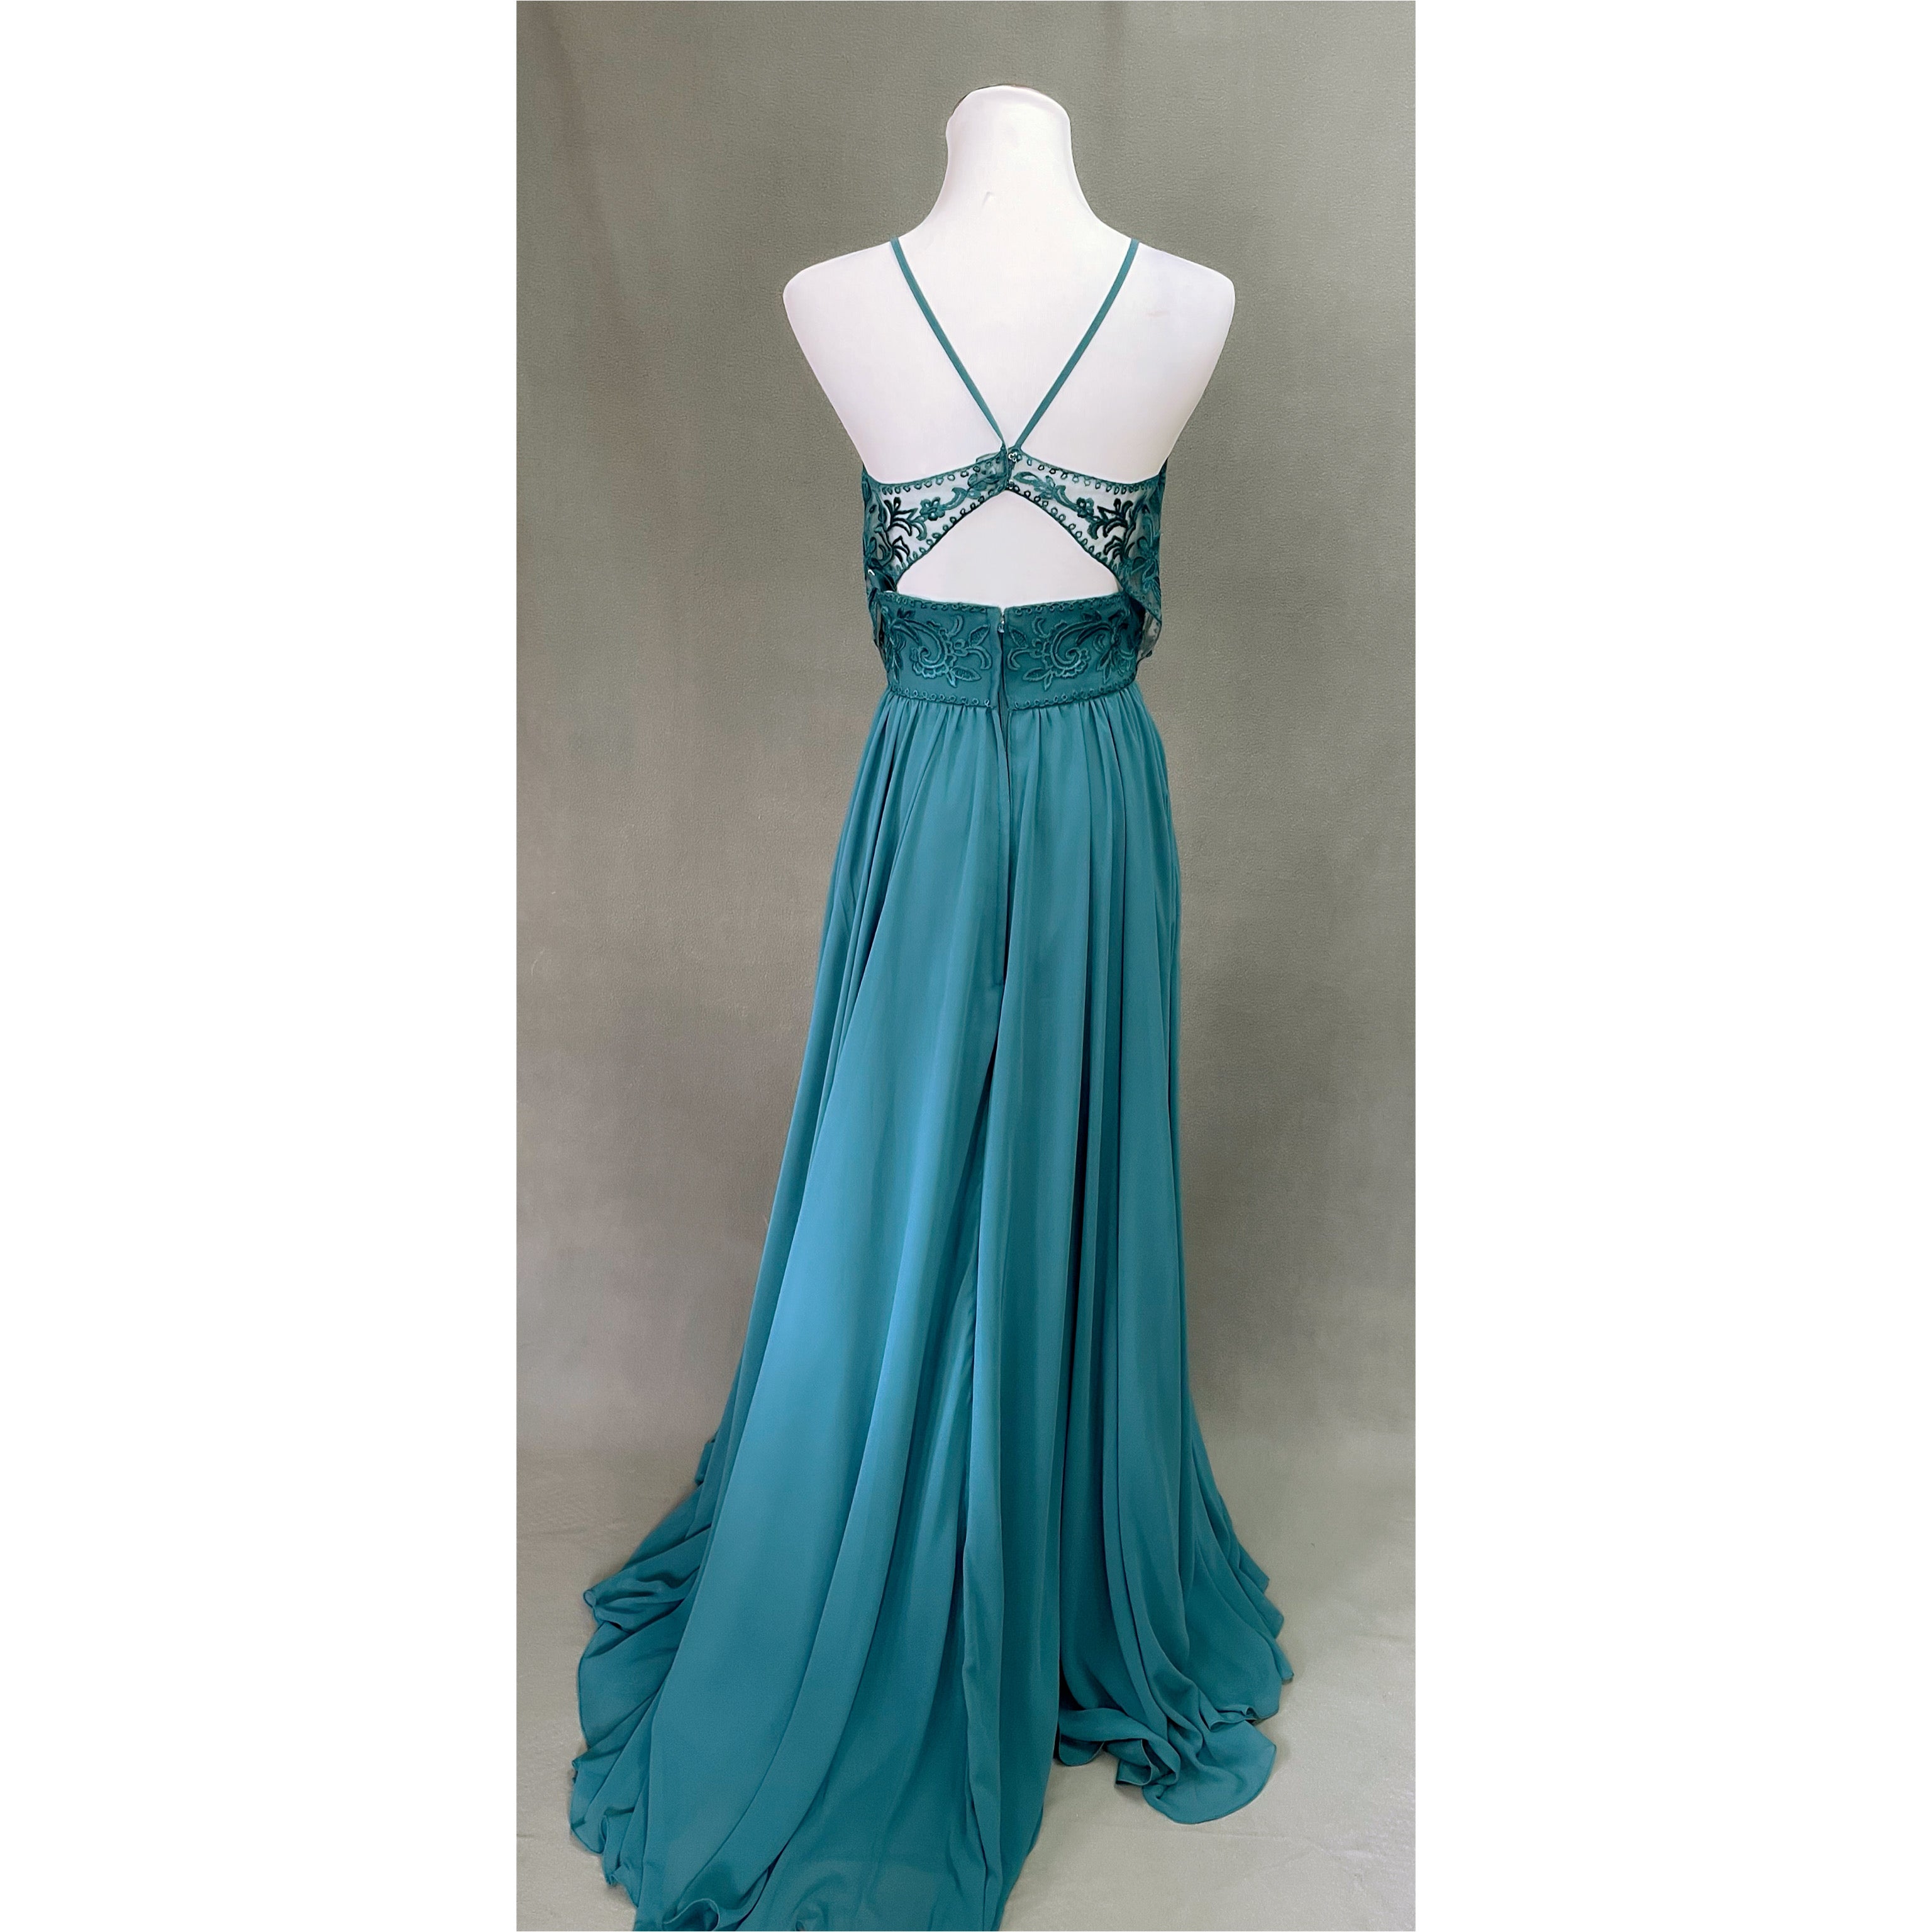 Kennedy Blue teal dress, size 2